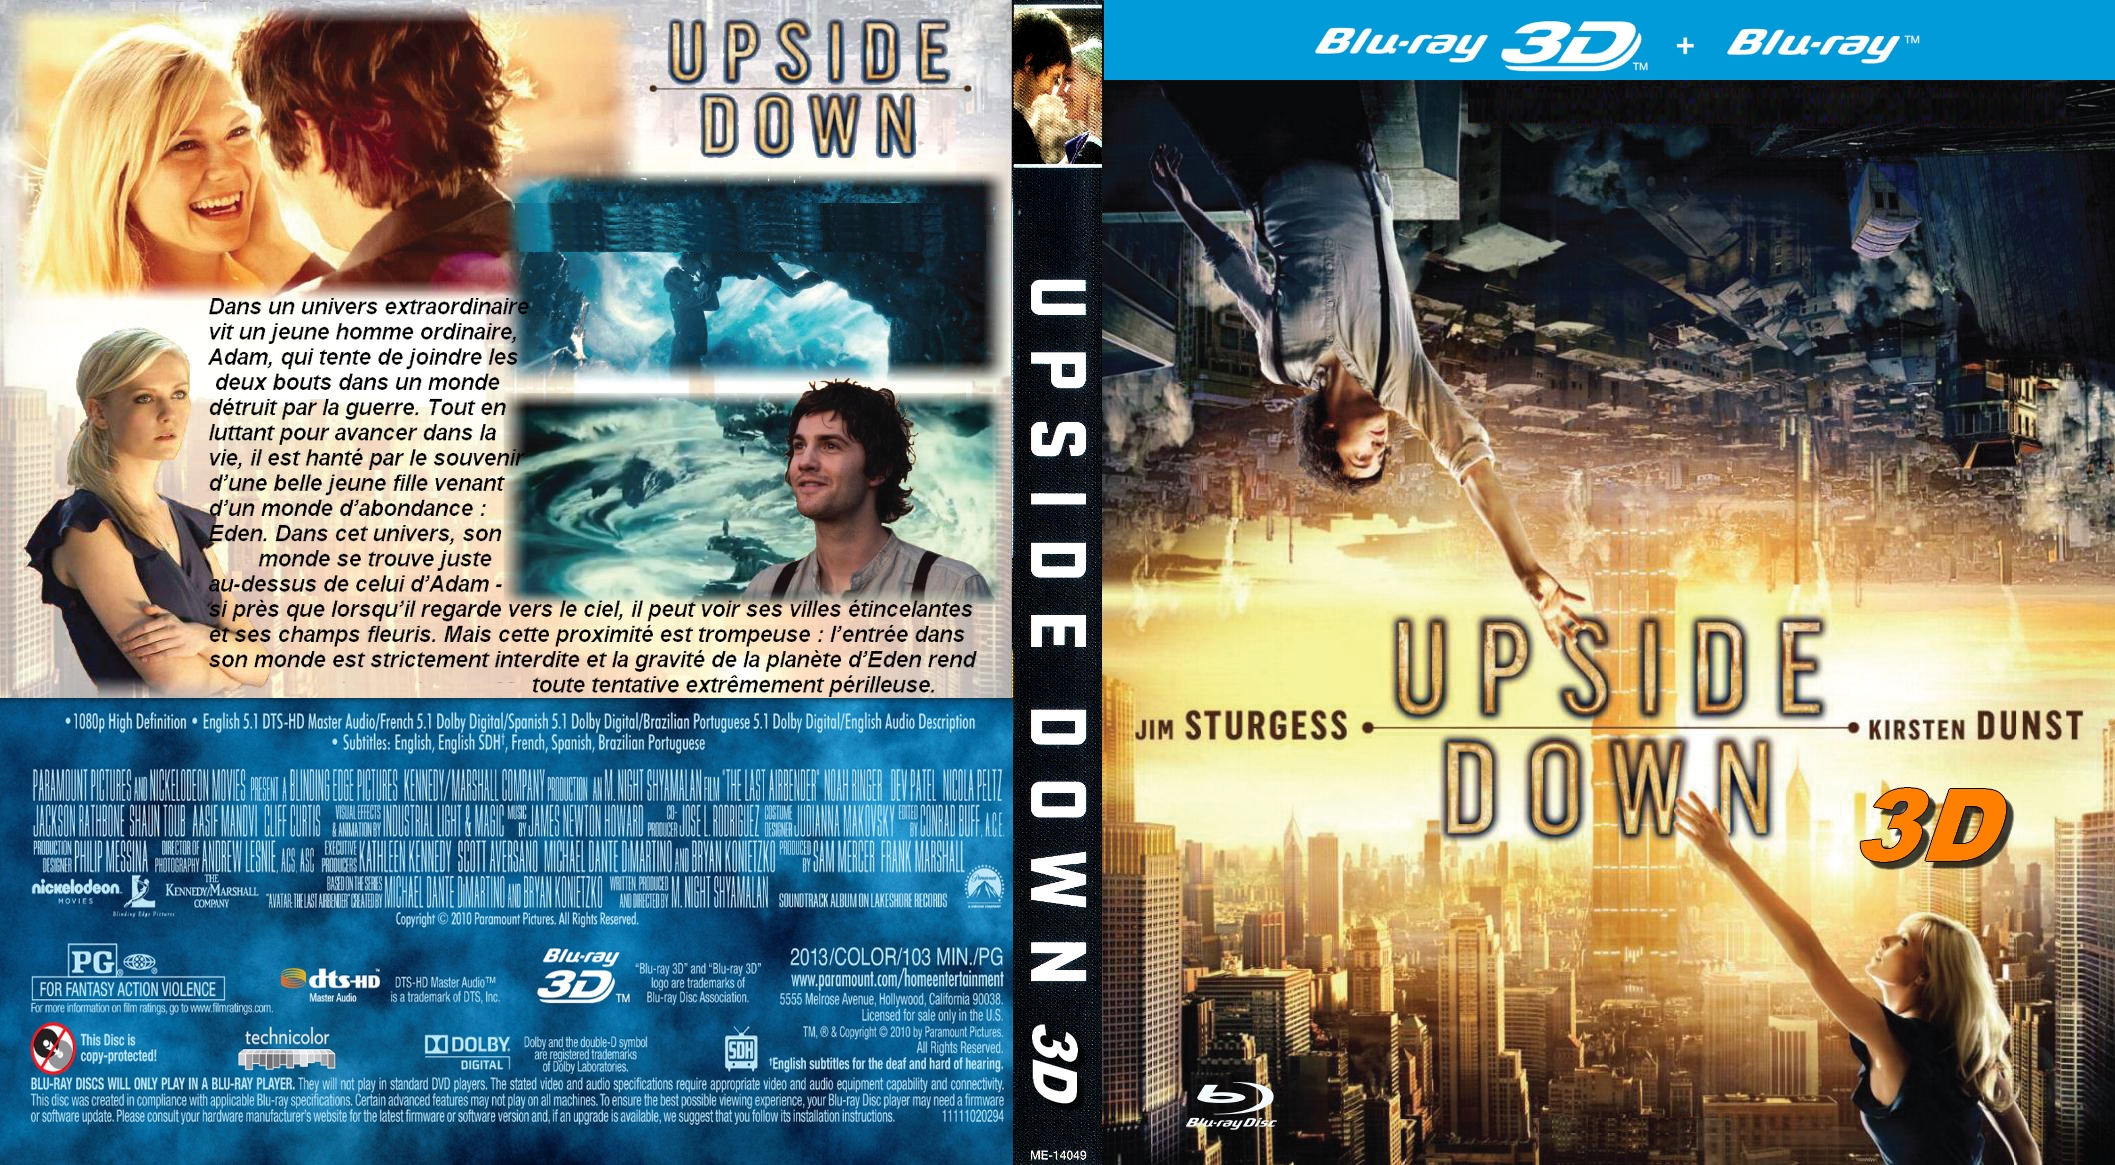 Jaquette DVD Upside Down custom (BLU-RAY)